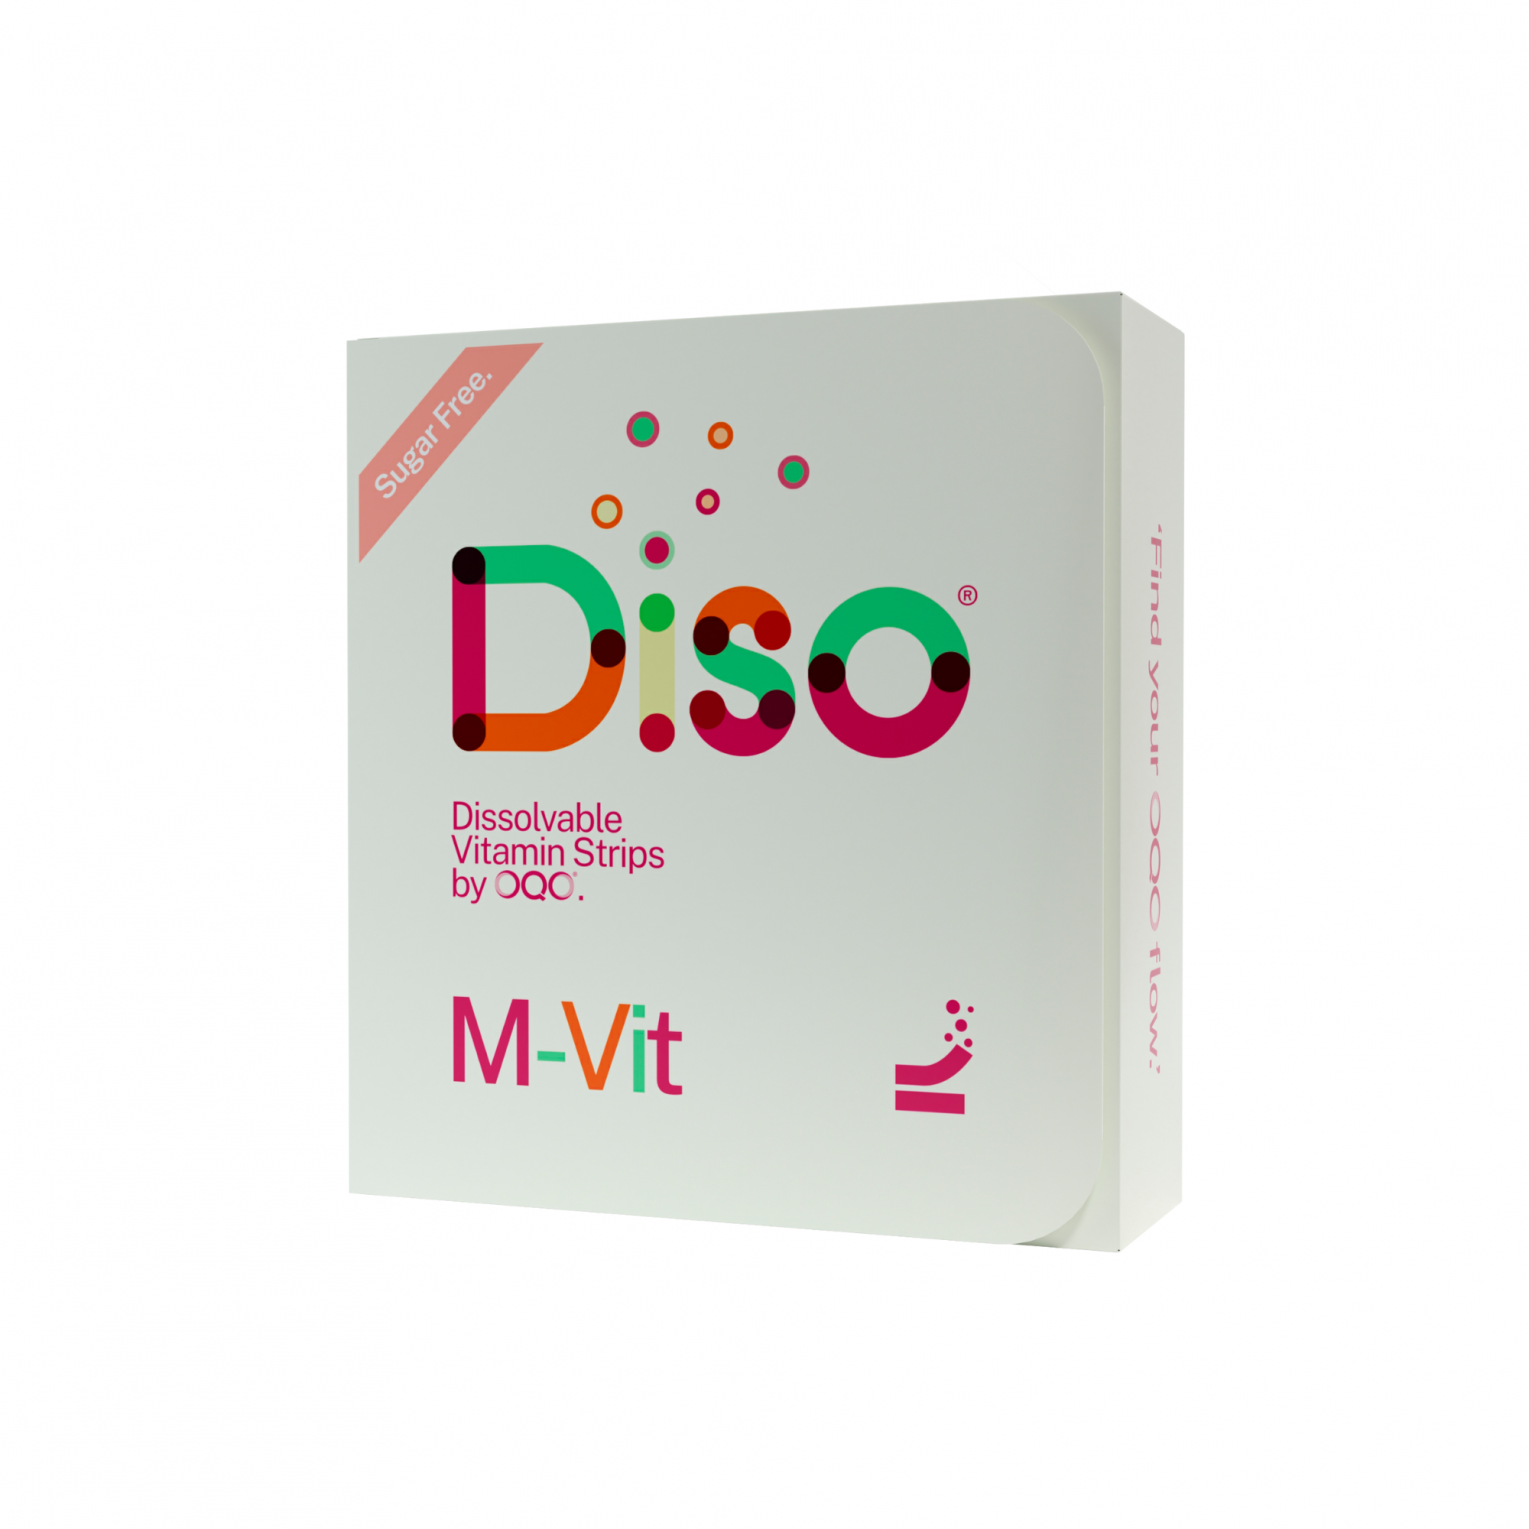 Diso M-Vit Dissolvable Vitamin Strips 30's